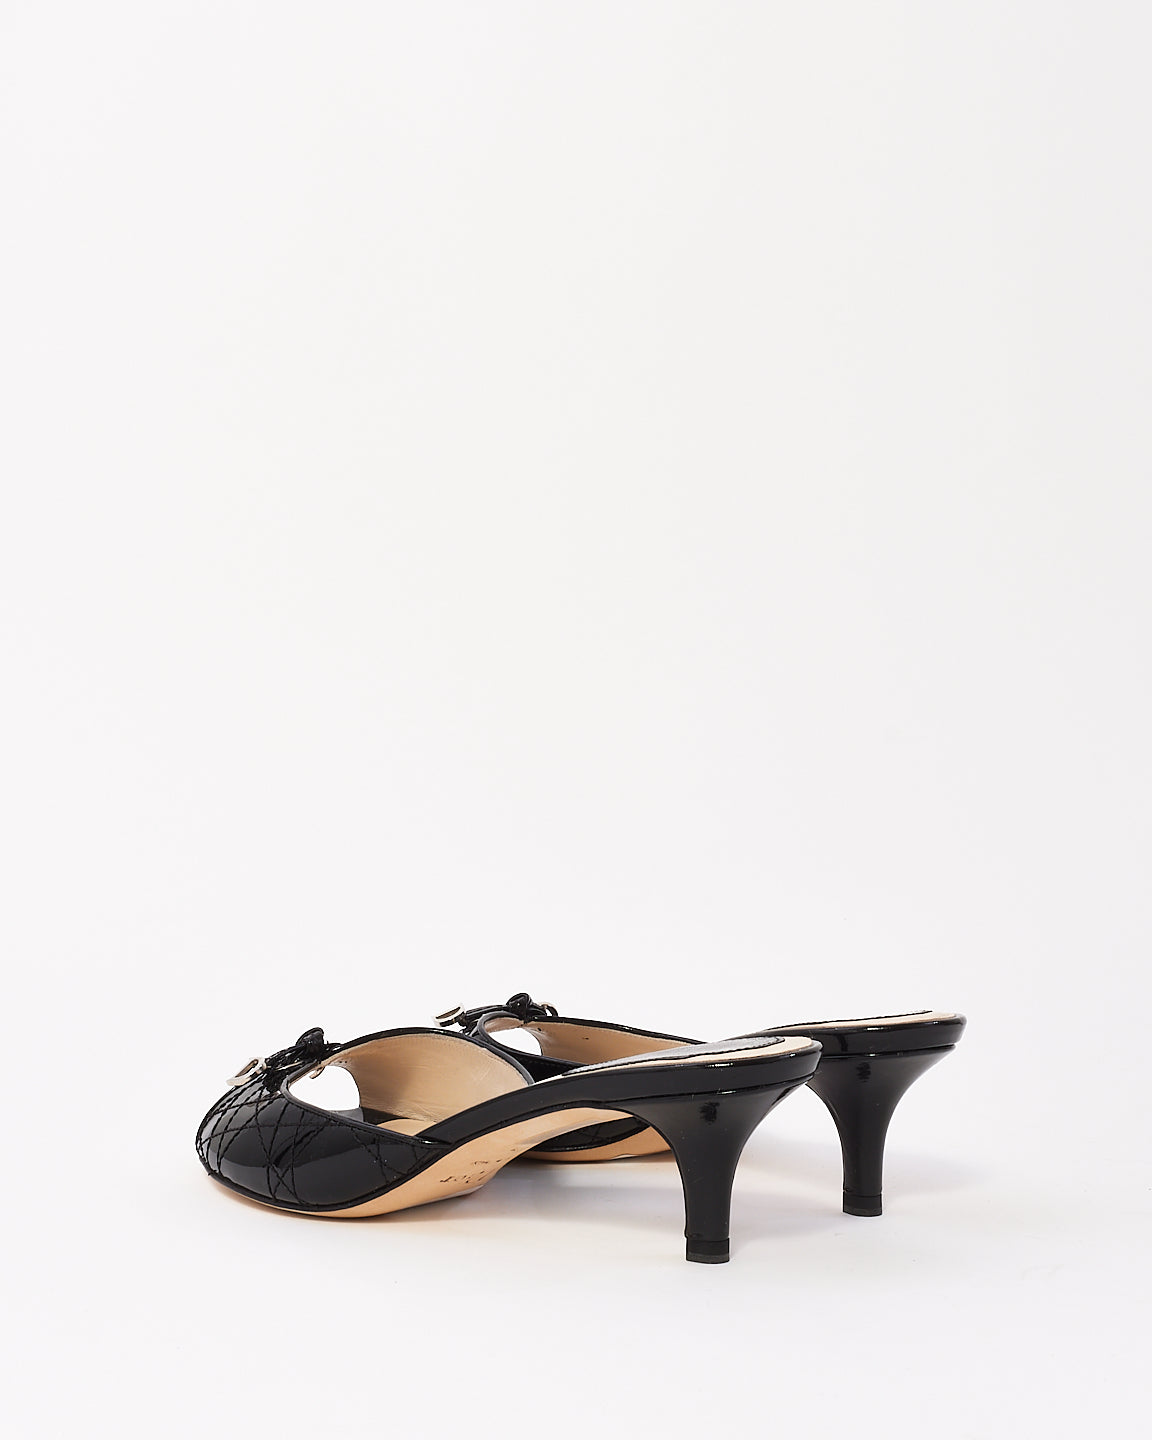 Sandales en cuir Cannage verni noir Dior -36,5